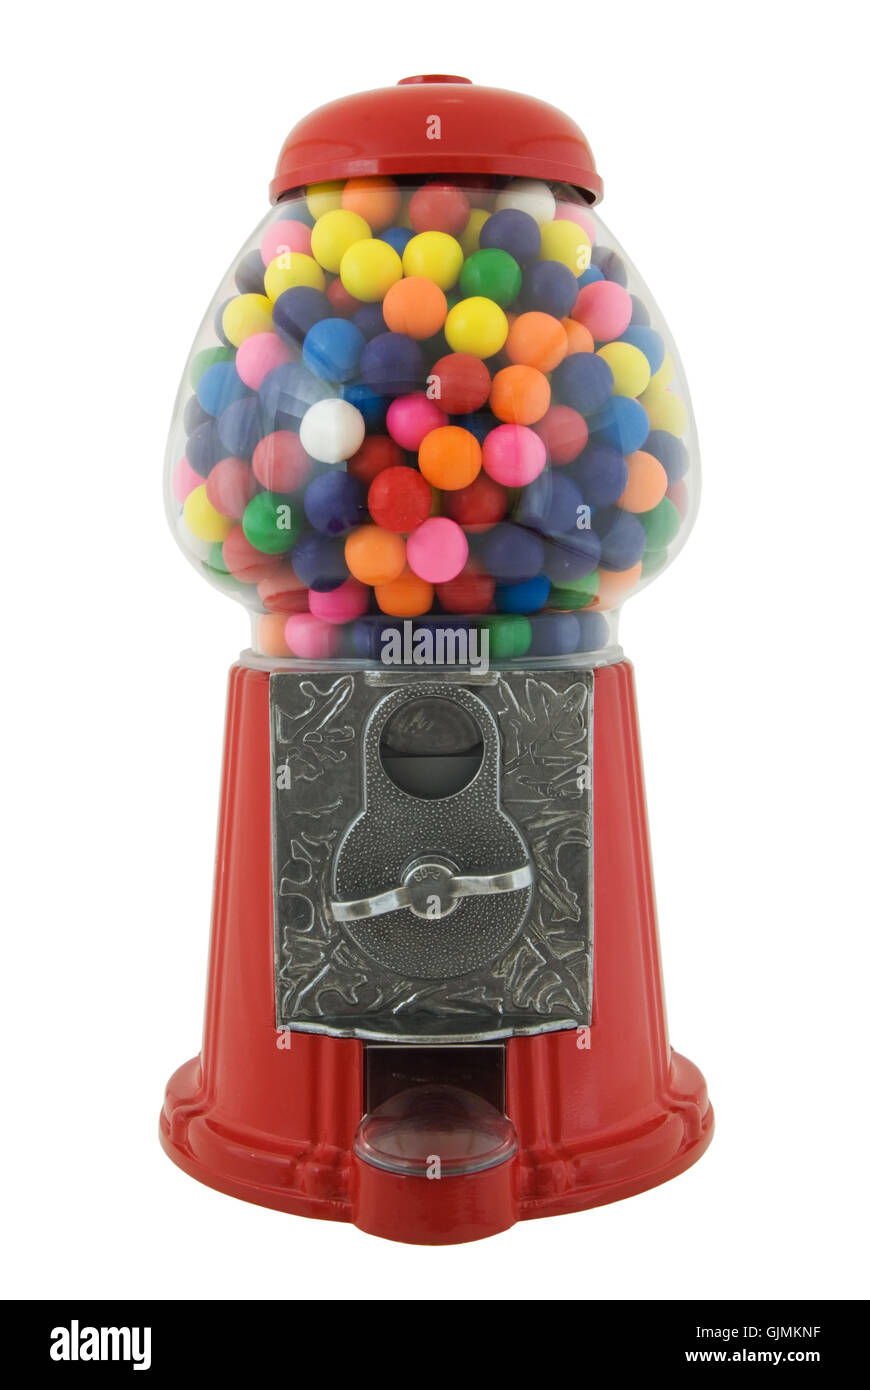 isolated candy machine Stock Photo